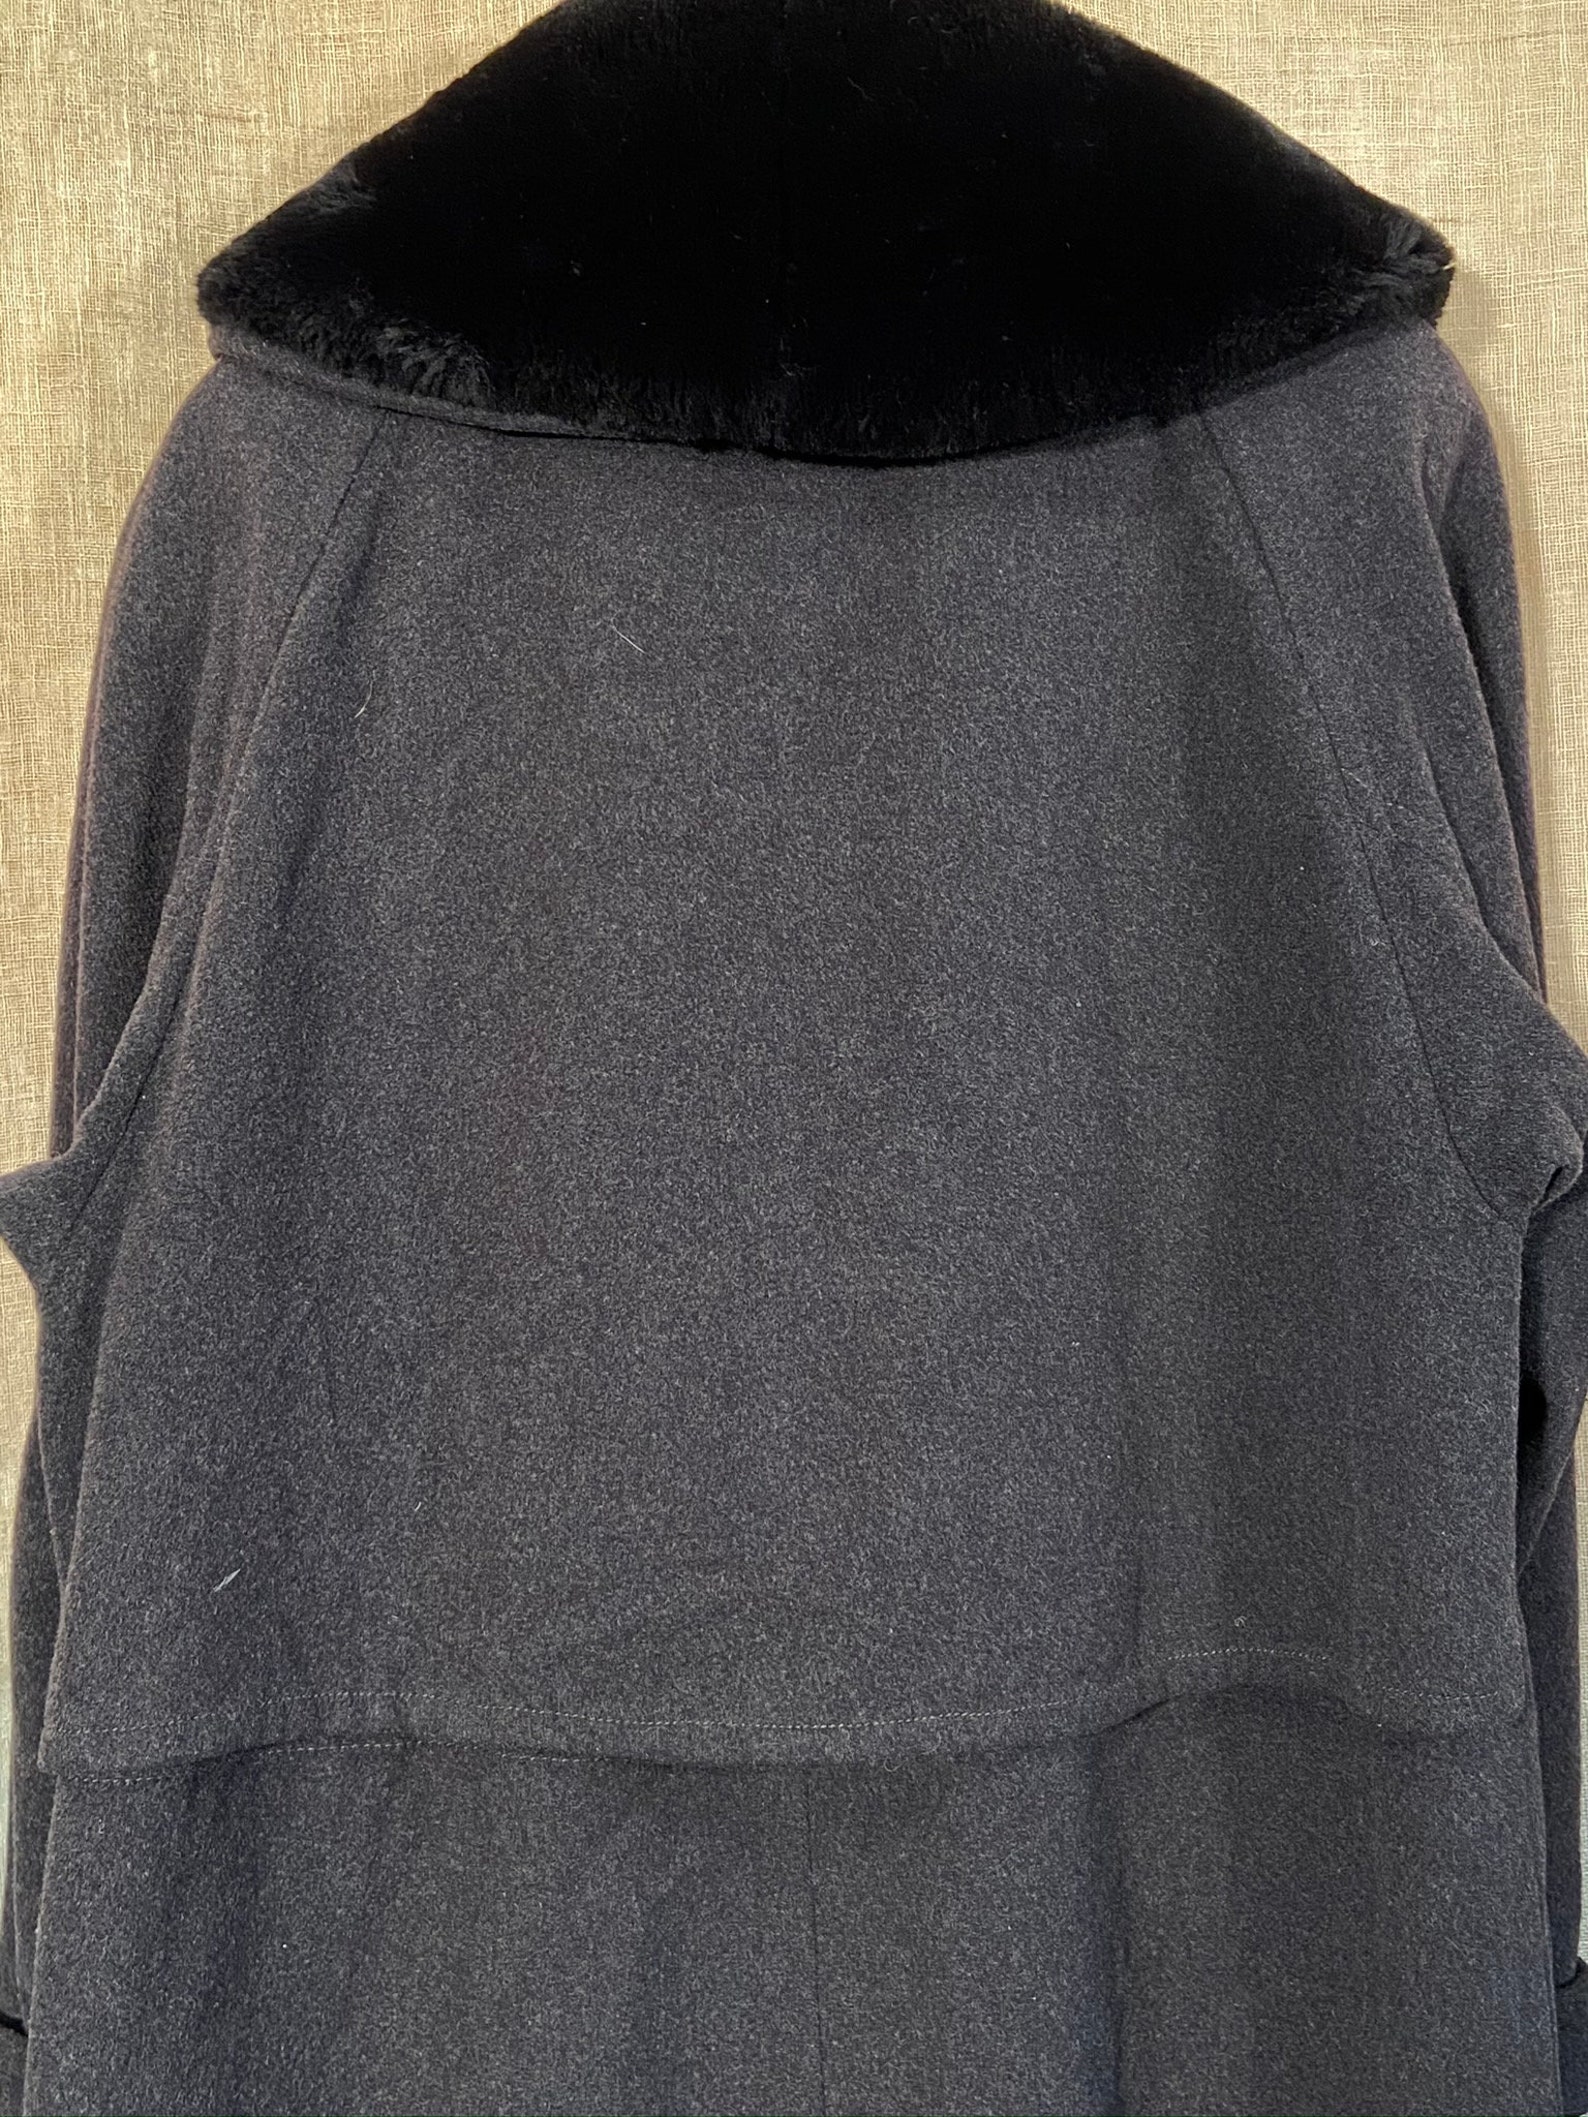 Wool & Cashmere Coat Slate Grey Chic and Timeless Winter Coat - Etsy UK